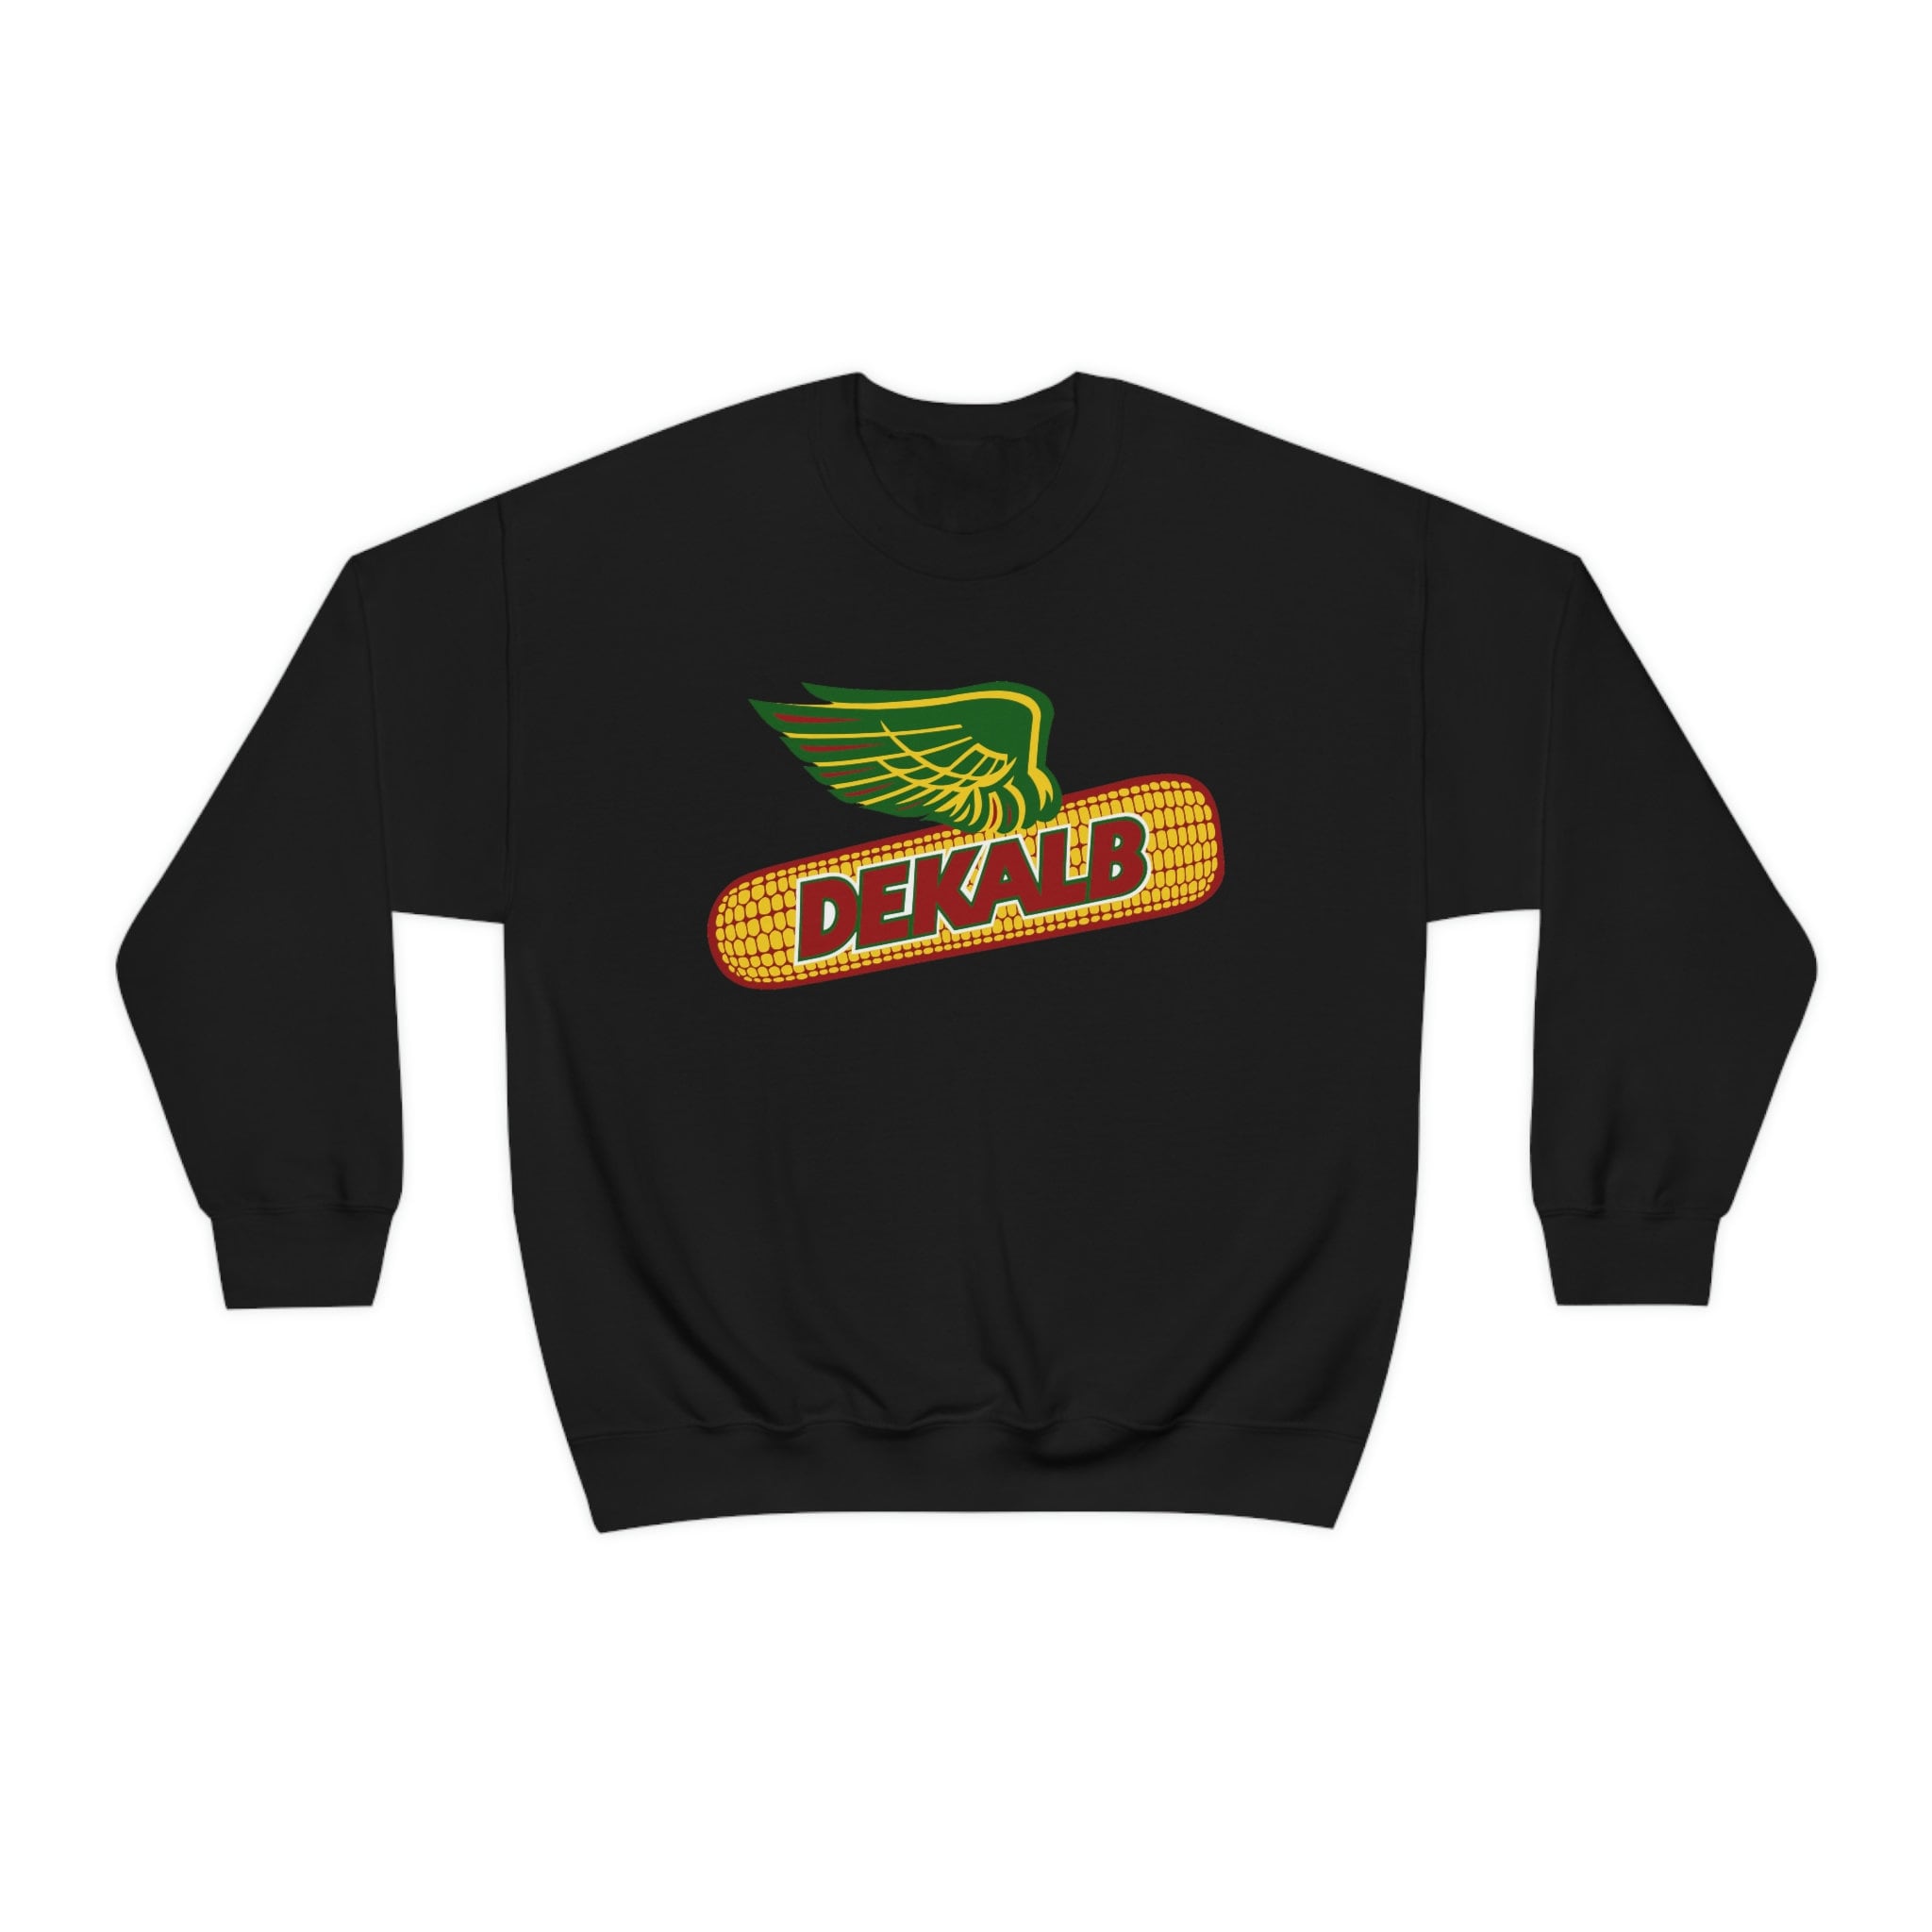 forvisning katastrofale Vejrudsigt Dekalb Corn Harvest Logo Men's Sweatshirt Size S to 3XL - Etsy